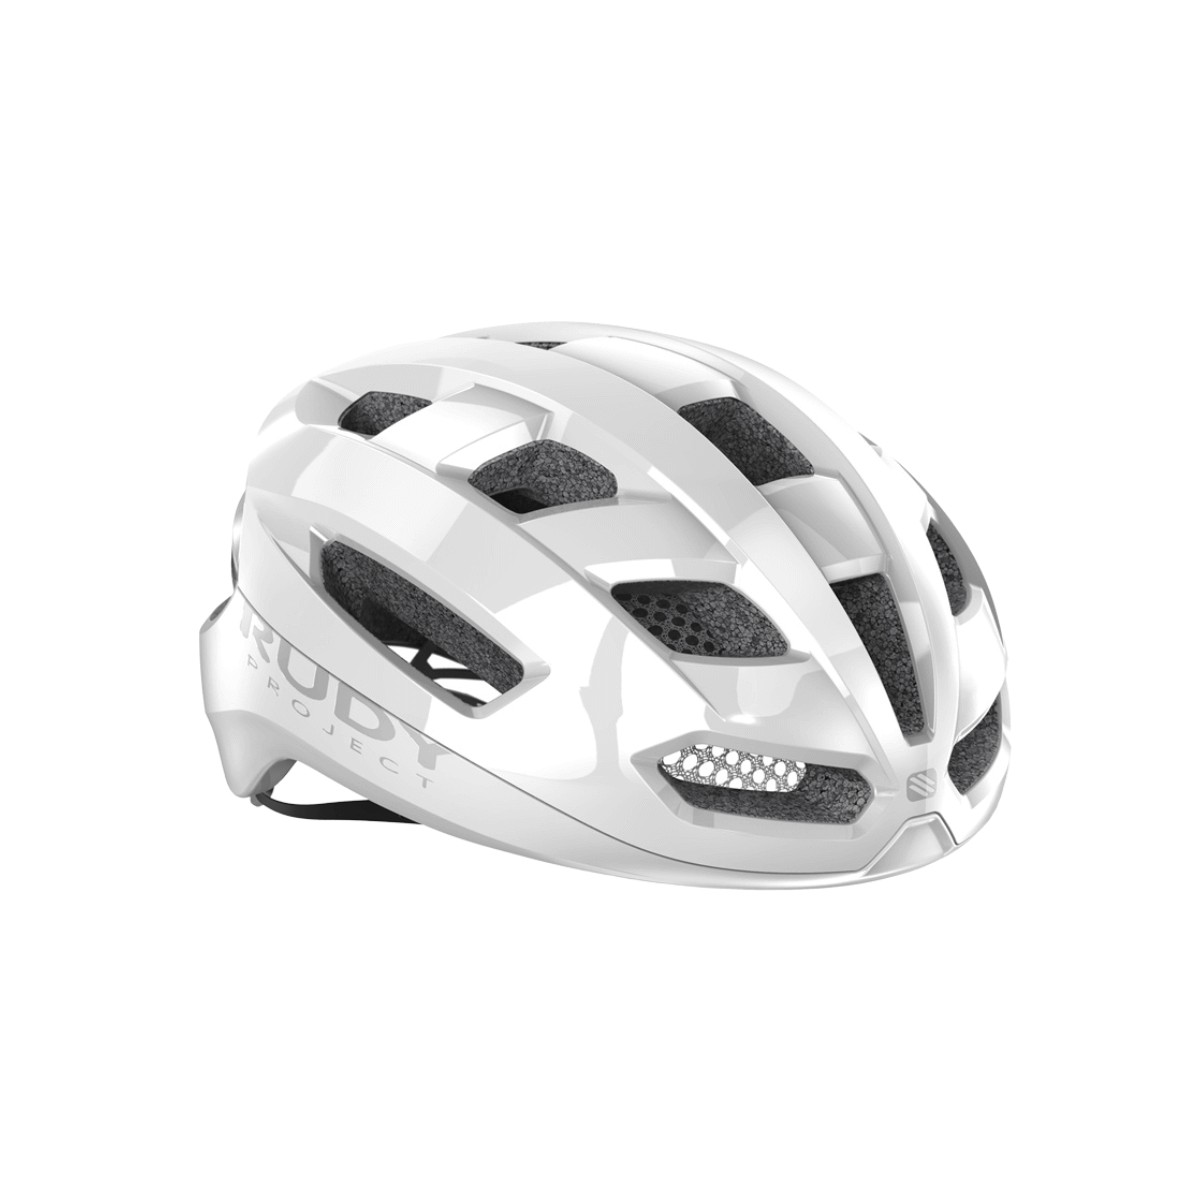 Helmet Rudy Project Skudo White, Size S-M